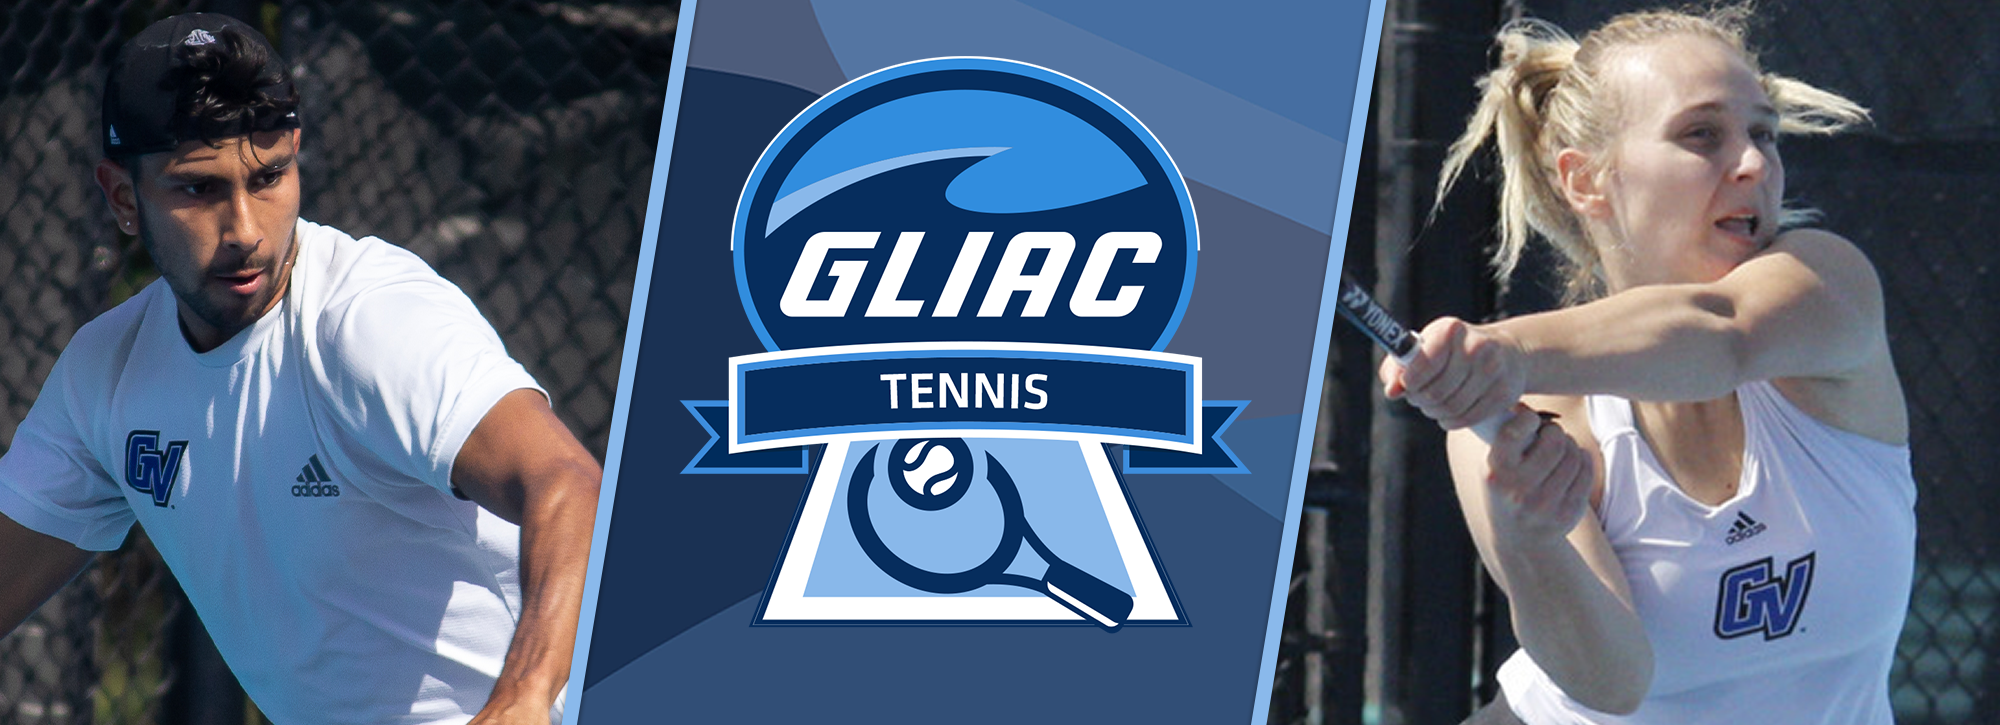 GVSU's Arce and Griva receive GLIAC Tennis Players of the Week honors